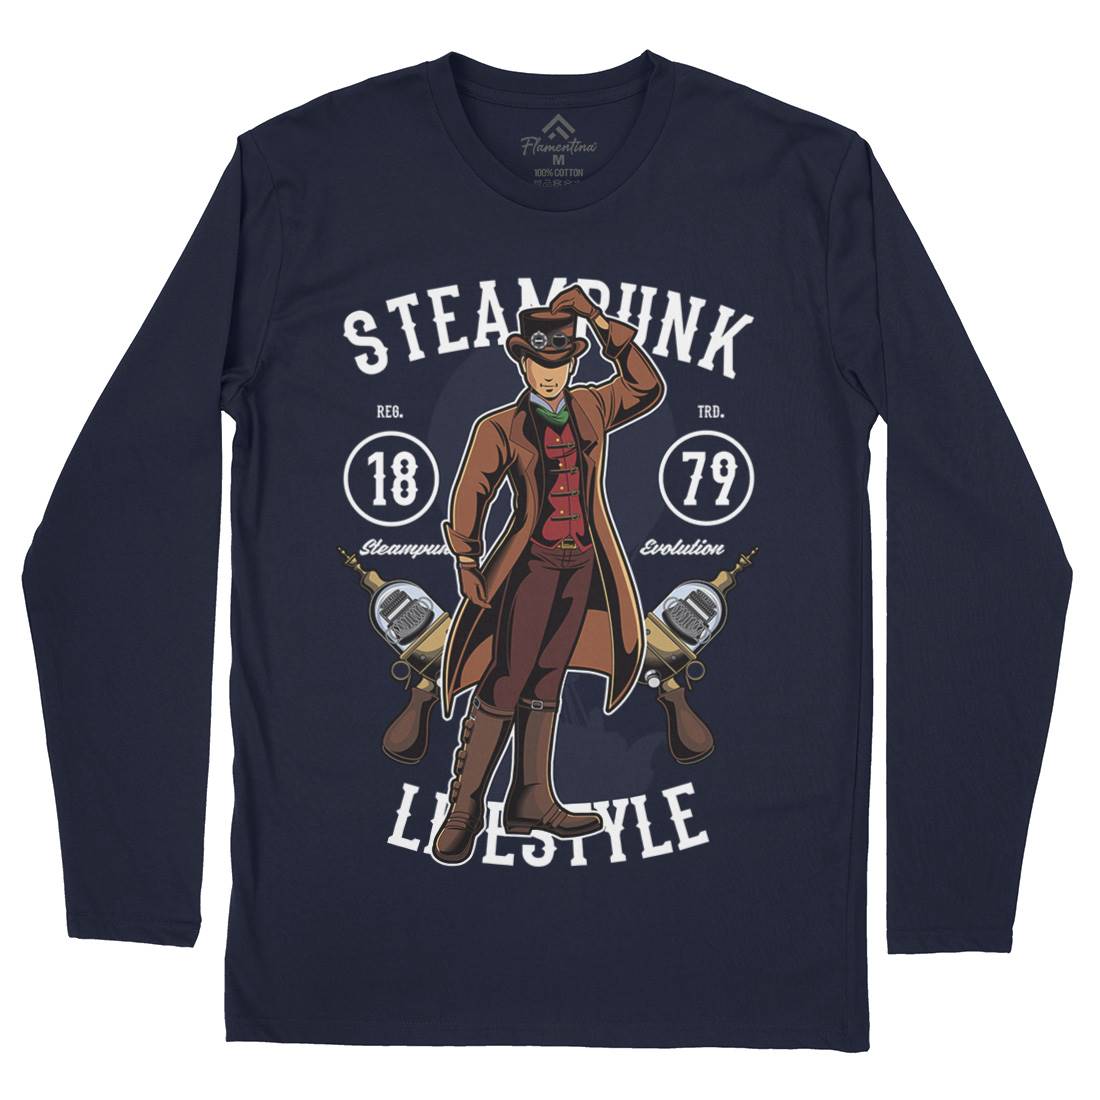 Lifestyle Mens Long Sleeve T-Shirt Steampunk C450